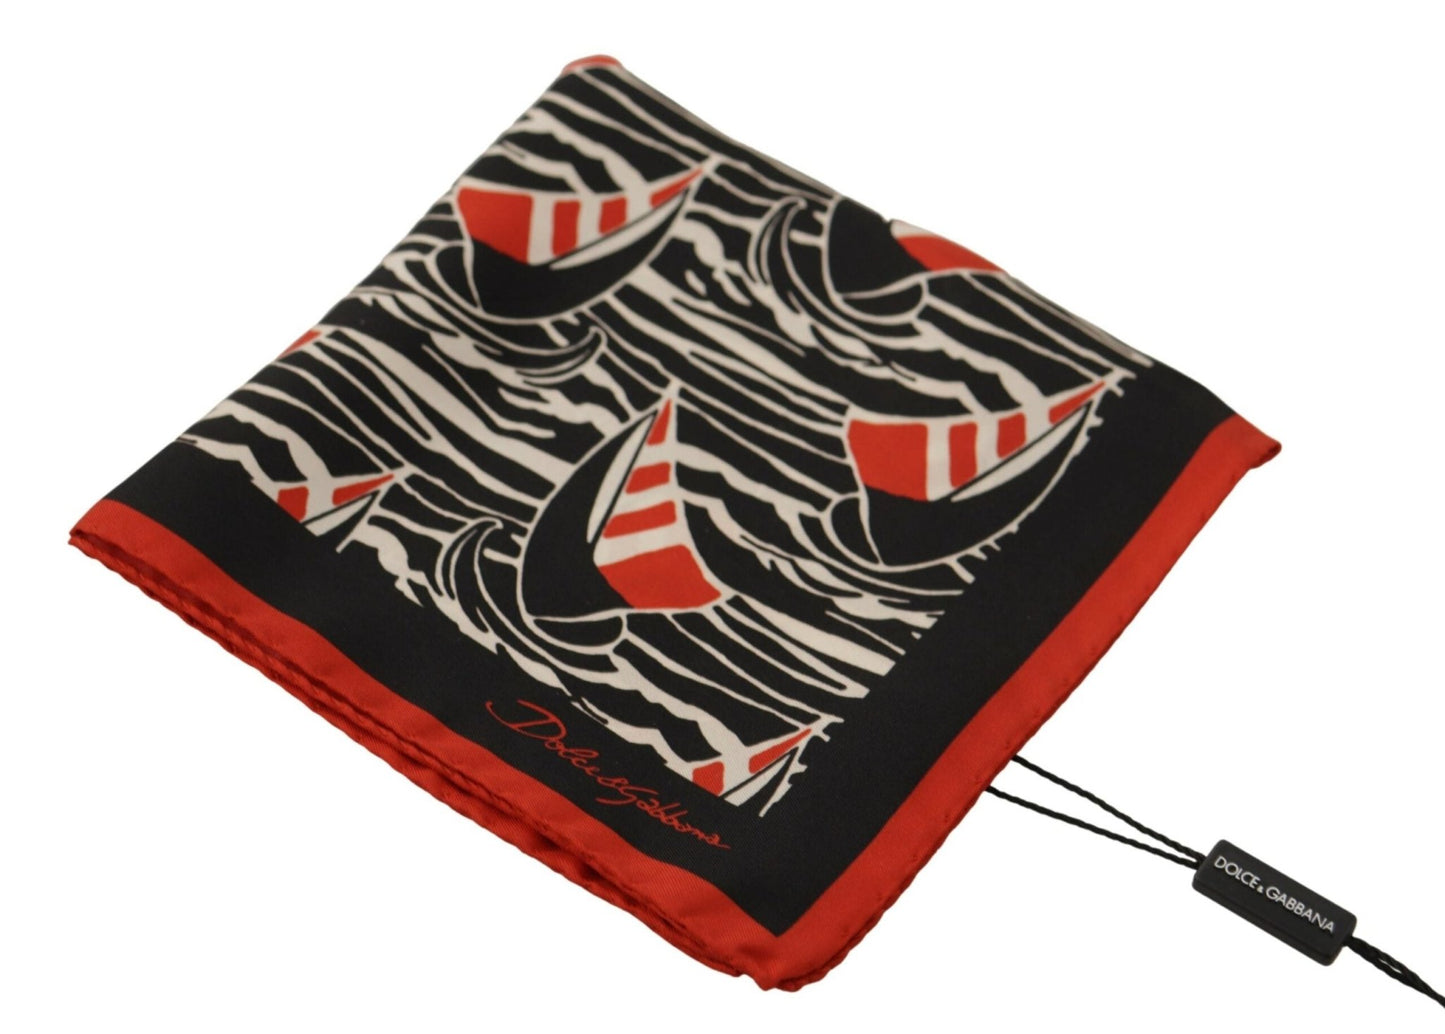 Dolce & Gabbana Black Red Sailboat Square Handkerchief Silk Scarf